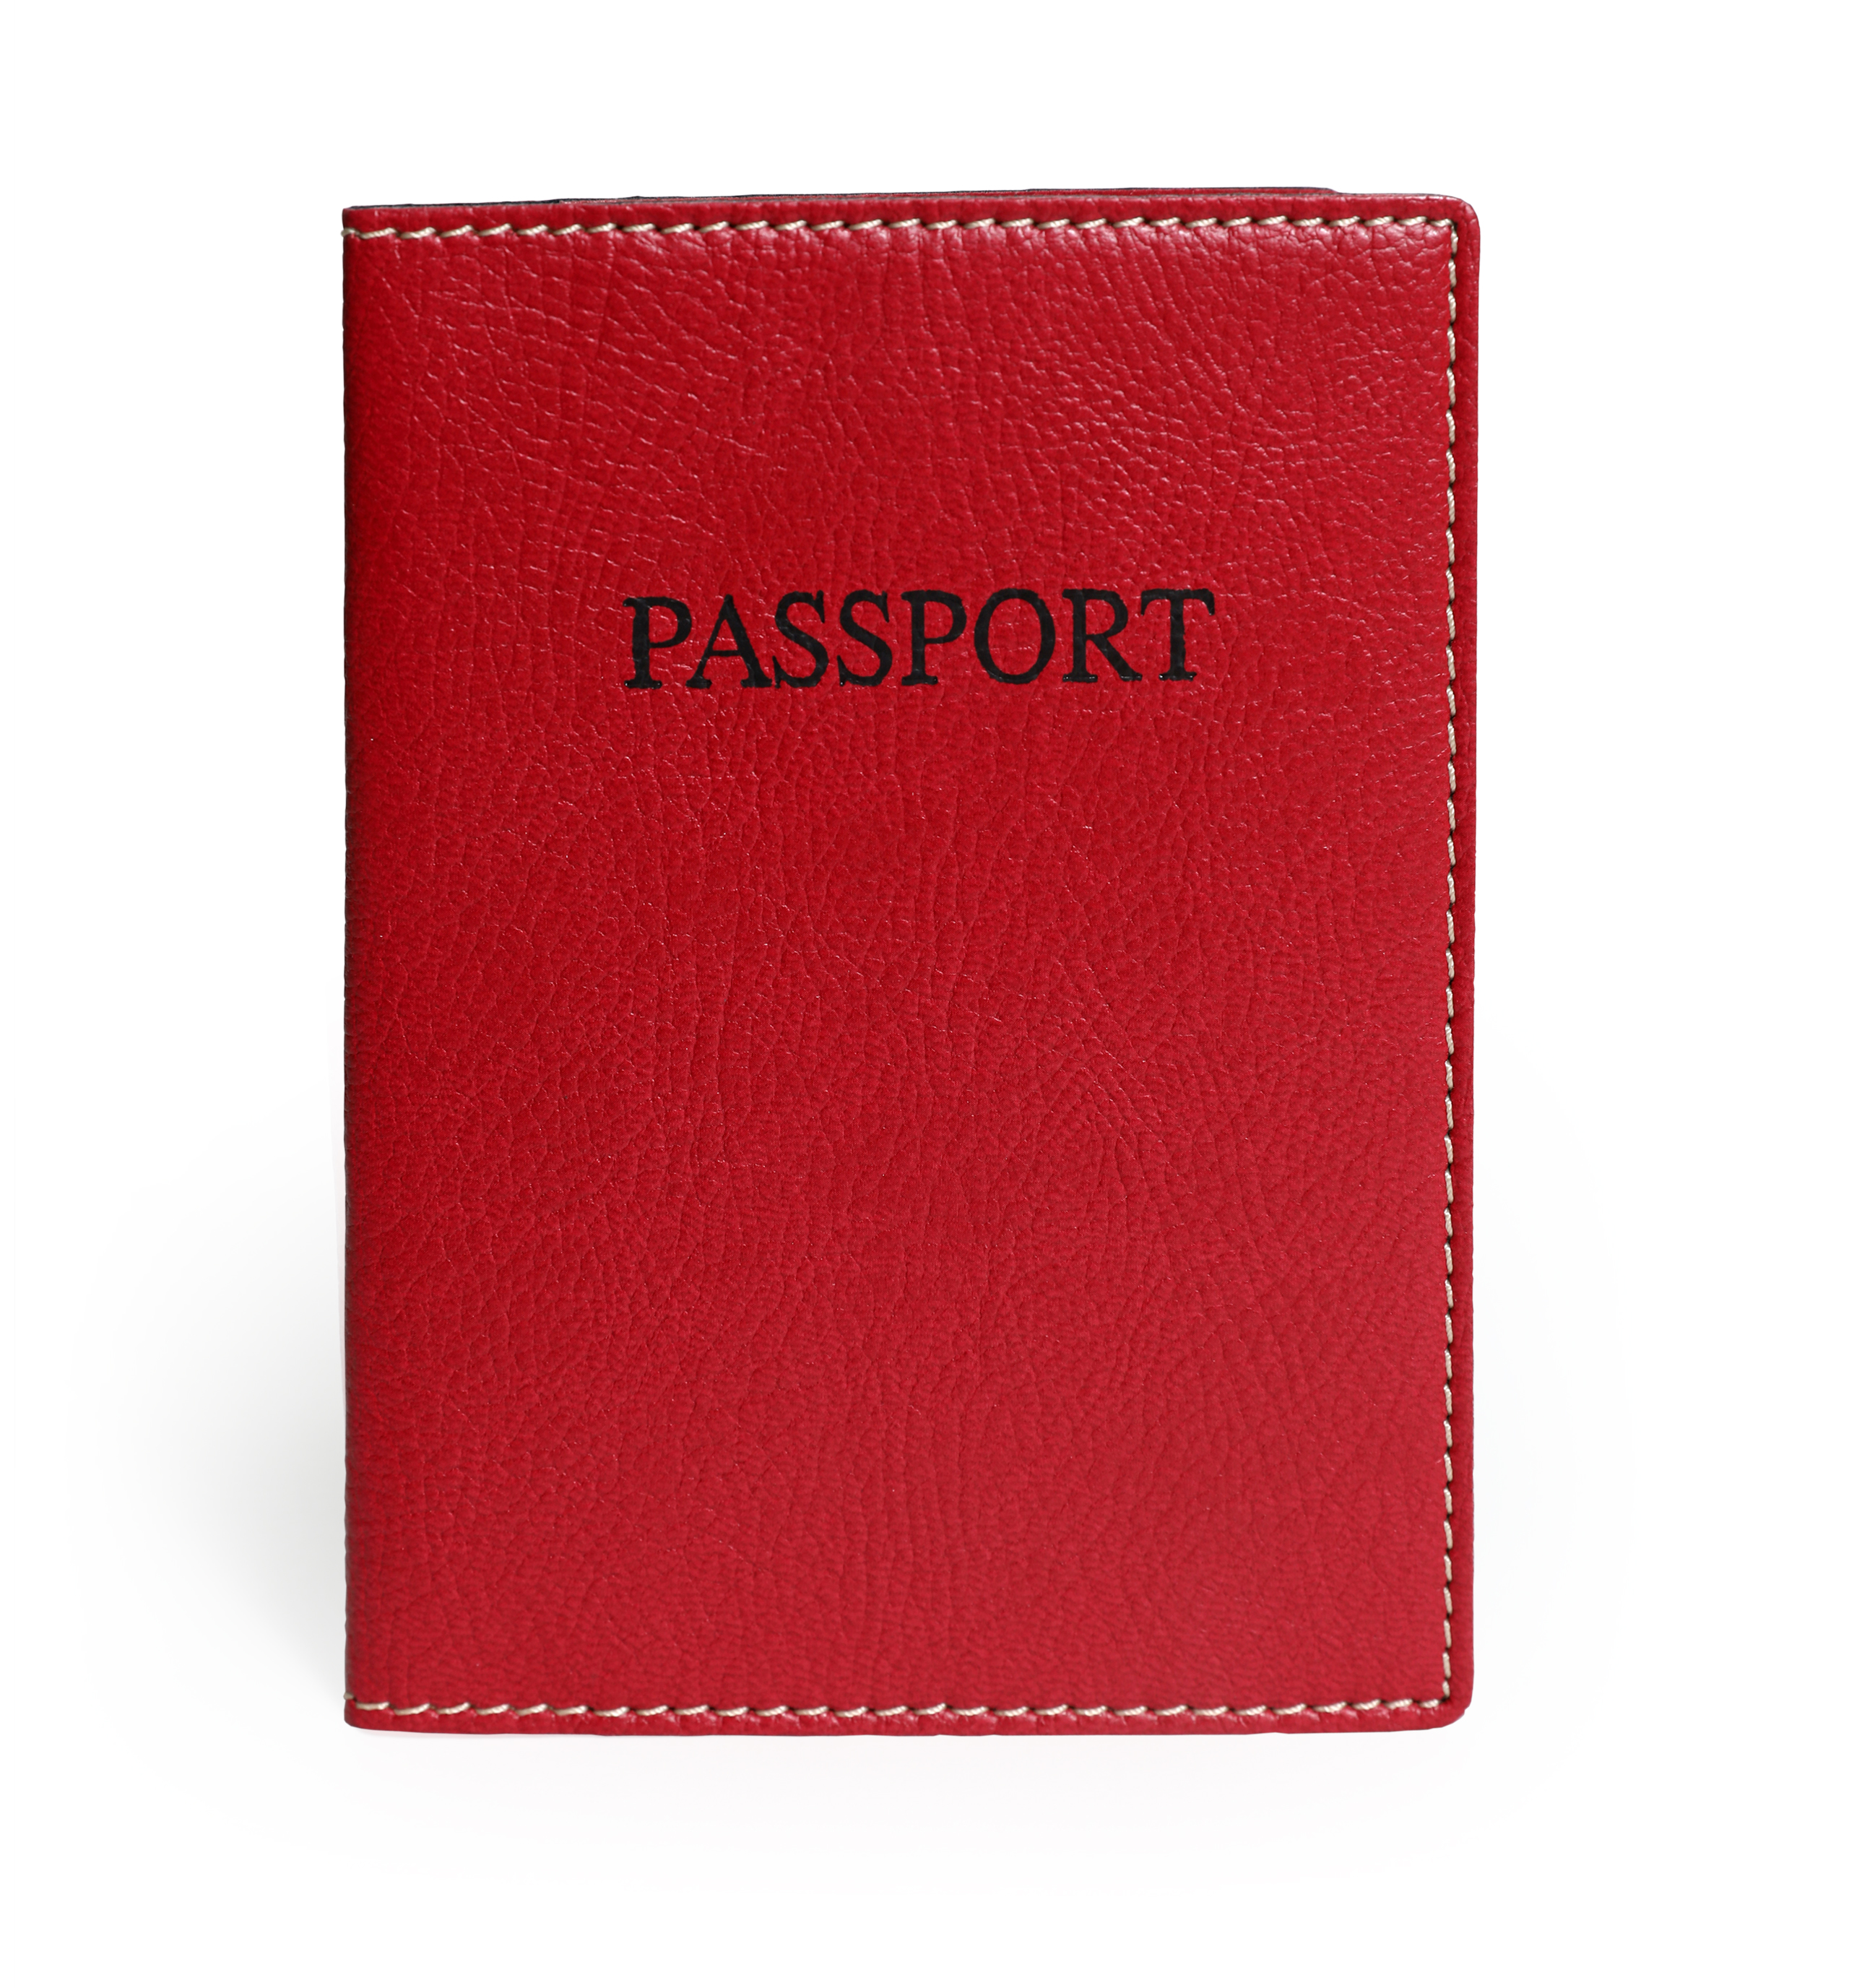 A4077-R - Passport Cover